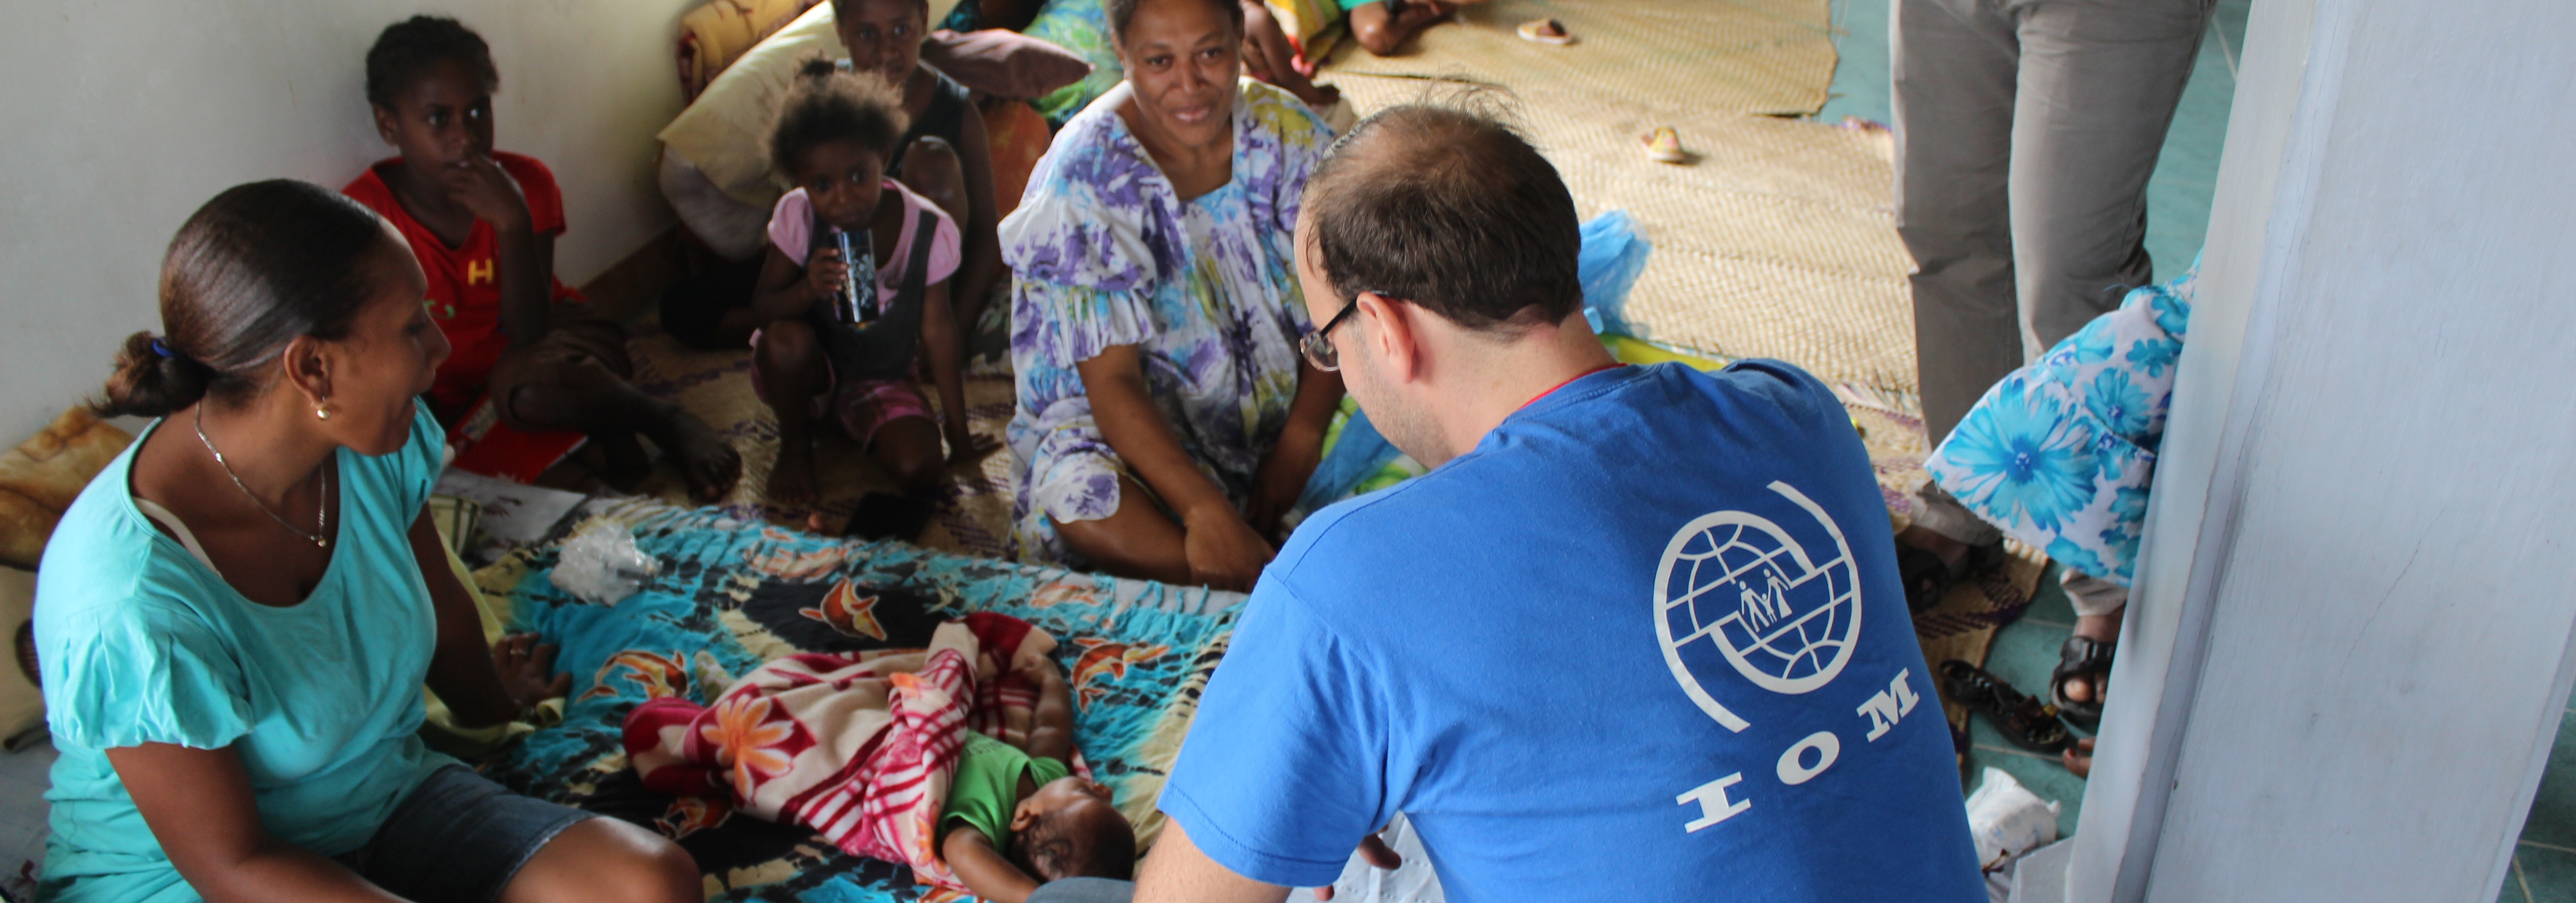 IOM supporting at the Ponga Church evacuation centre in Vanuatu (Photo Credit: IOM / Joe Lowry 2015)